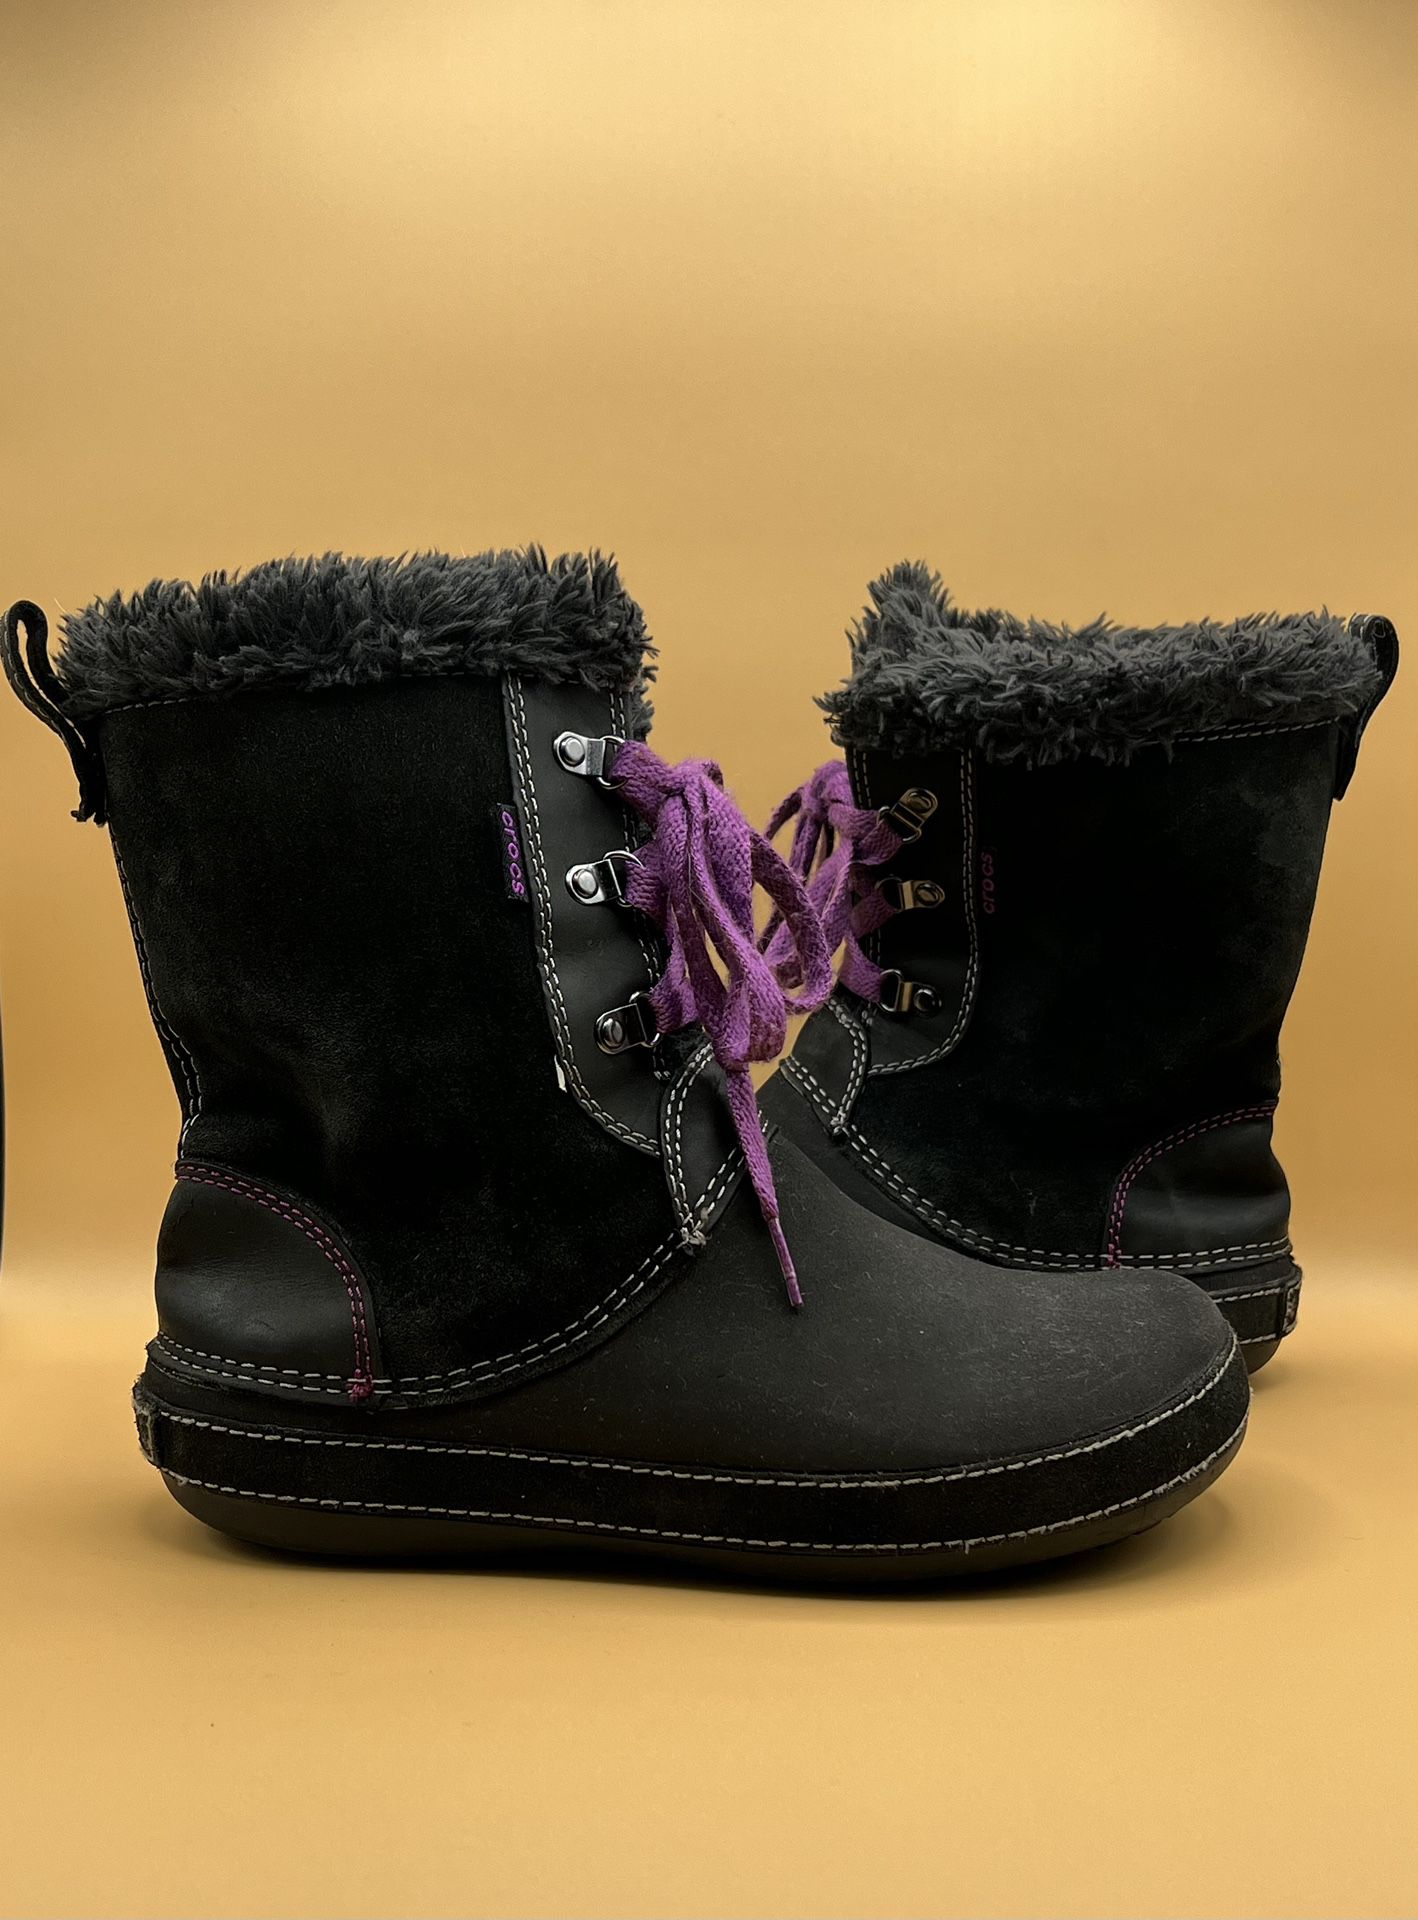 Crocs Berryessa Faux Fur Lined Hiking Boots - Women’s Size 8 (12913) Black Purple